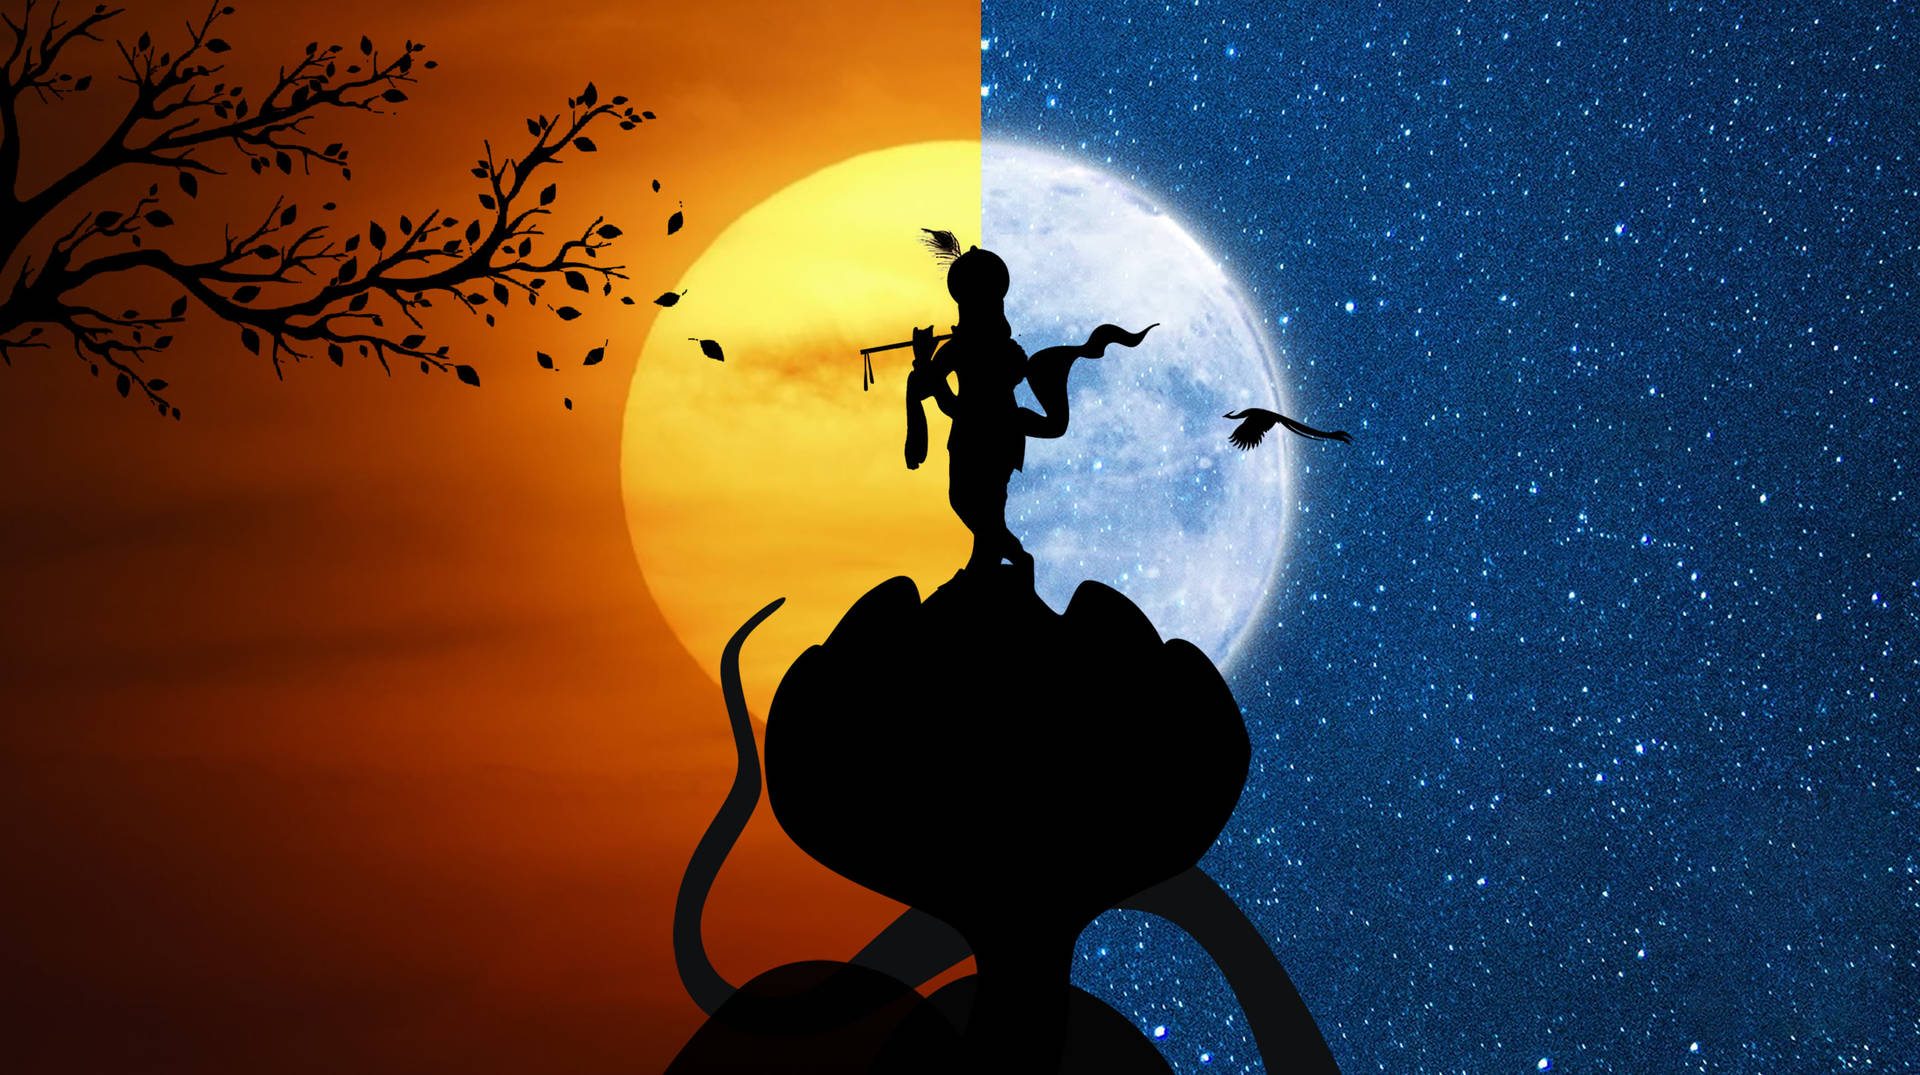 Shri Krishna Day And Night Silhouette Background